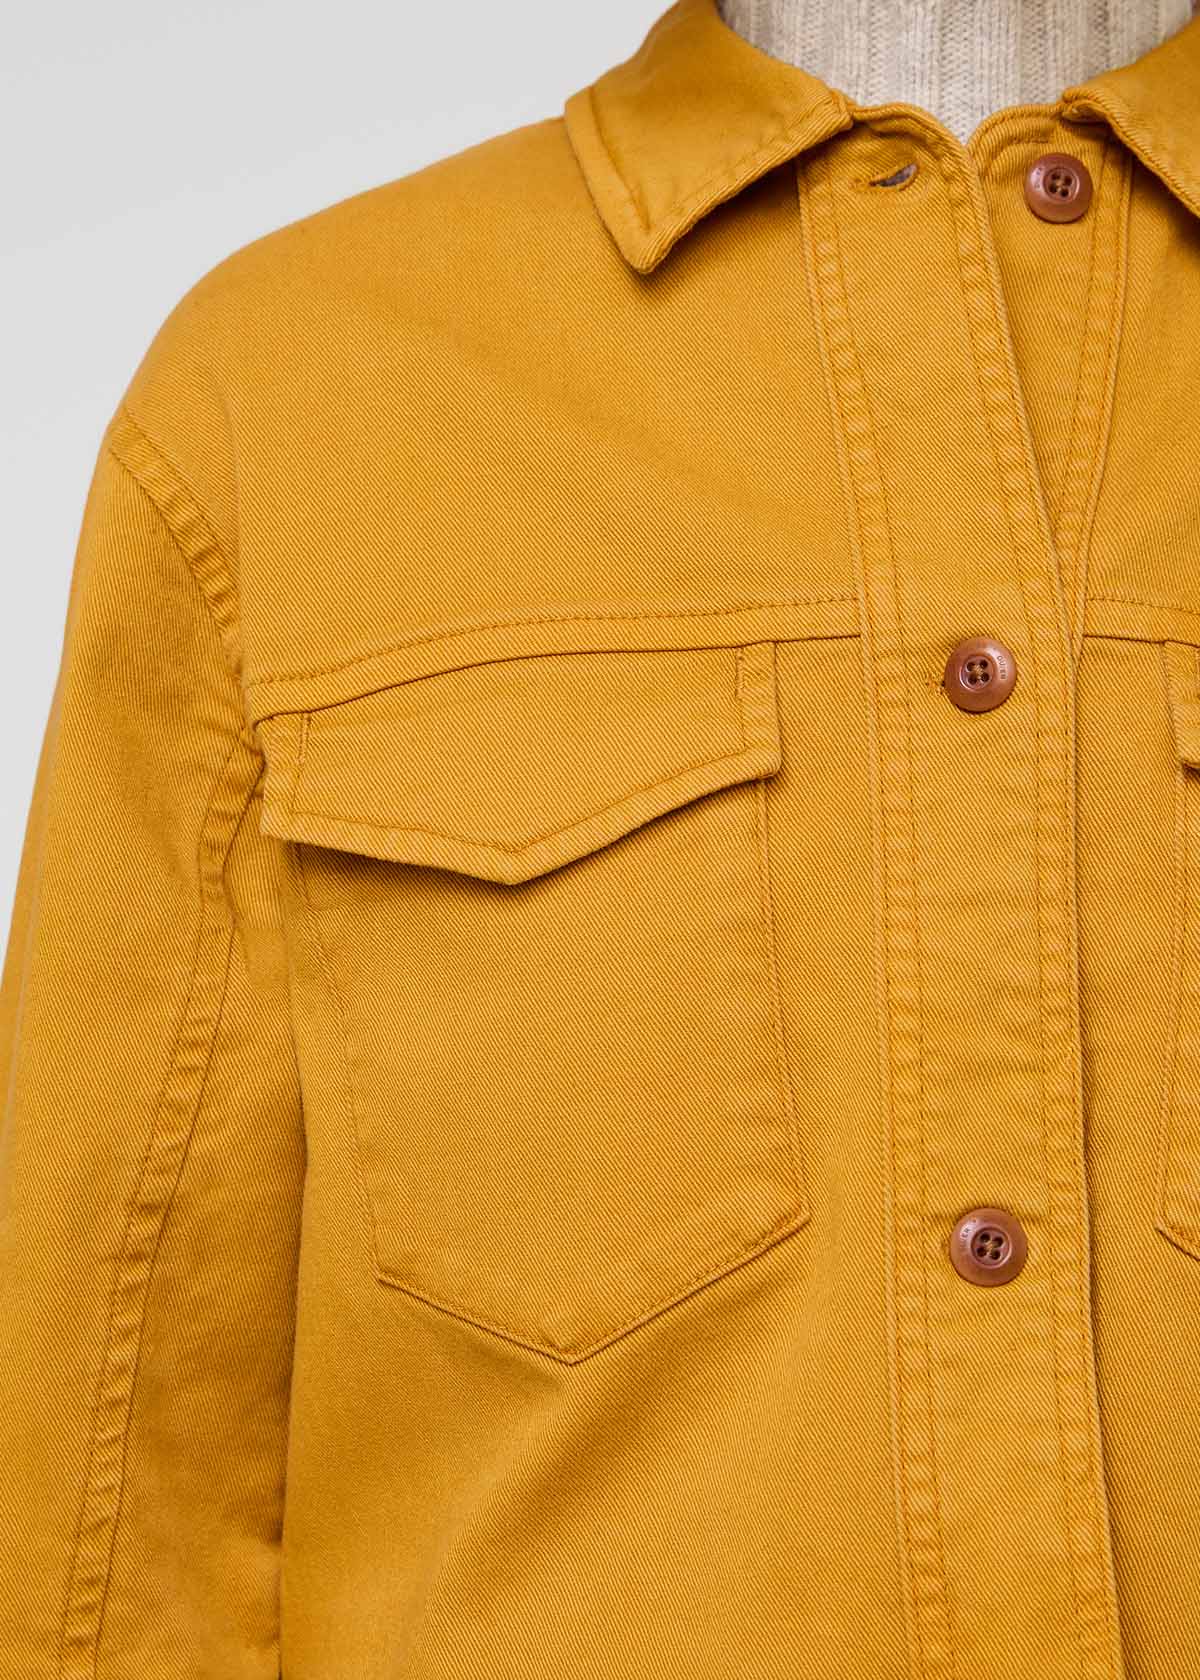 womens yellow cotton trucker jacket front button detail